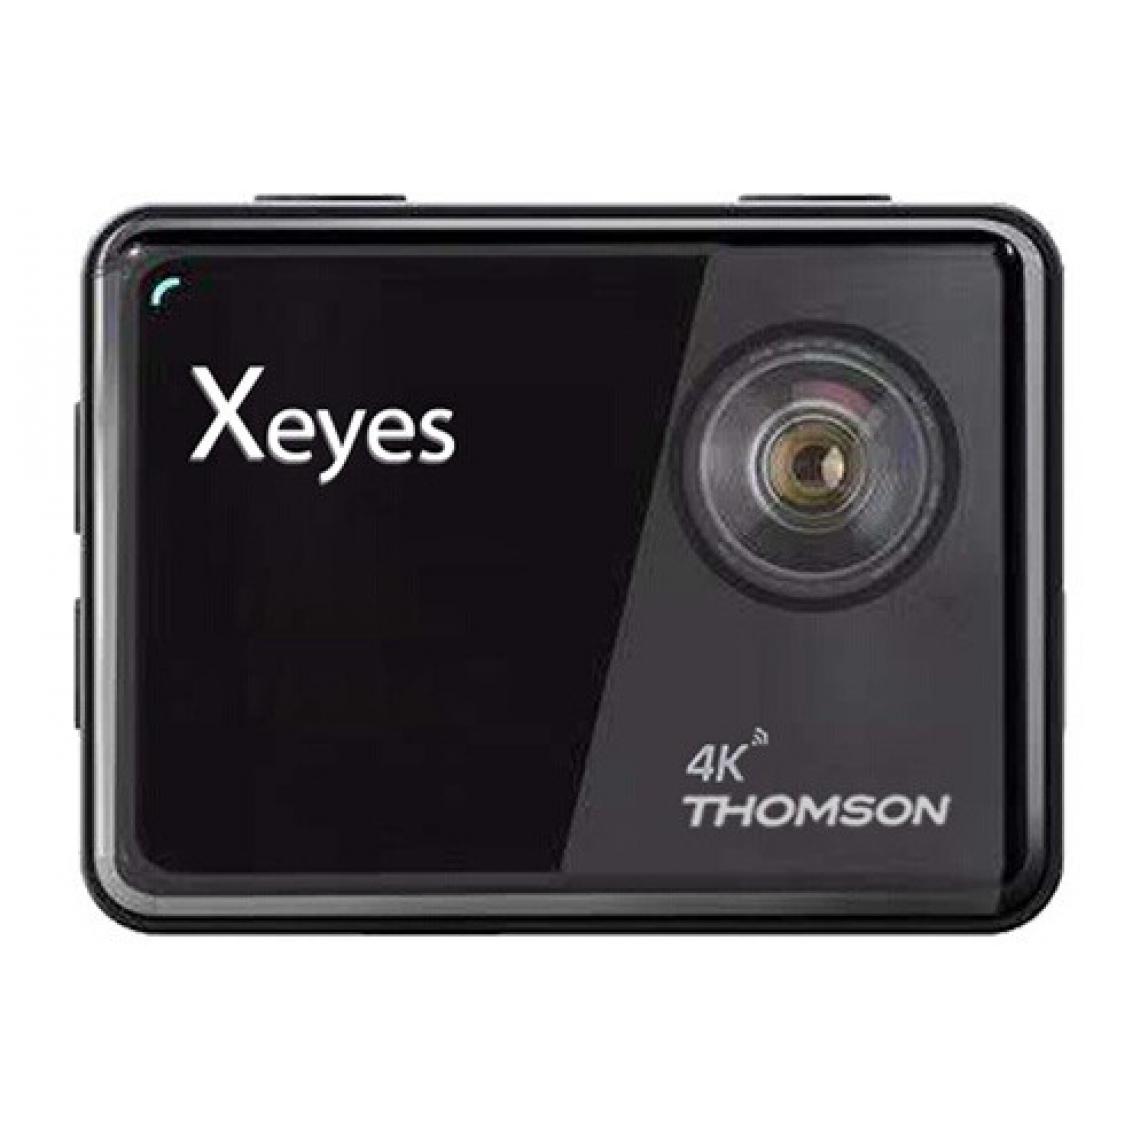 Thomson - XEYES 4K - Caméras Sportives